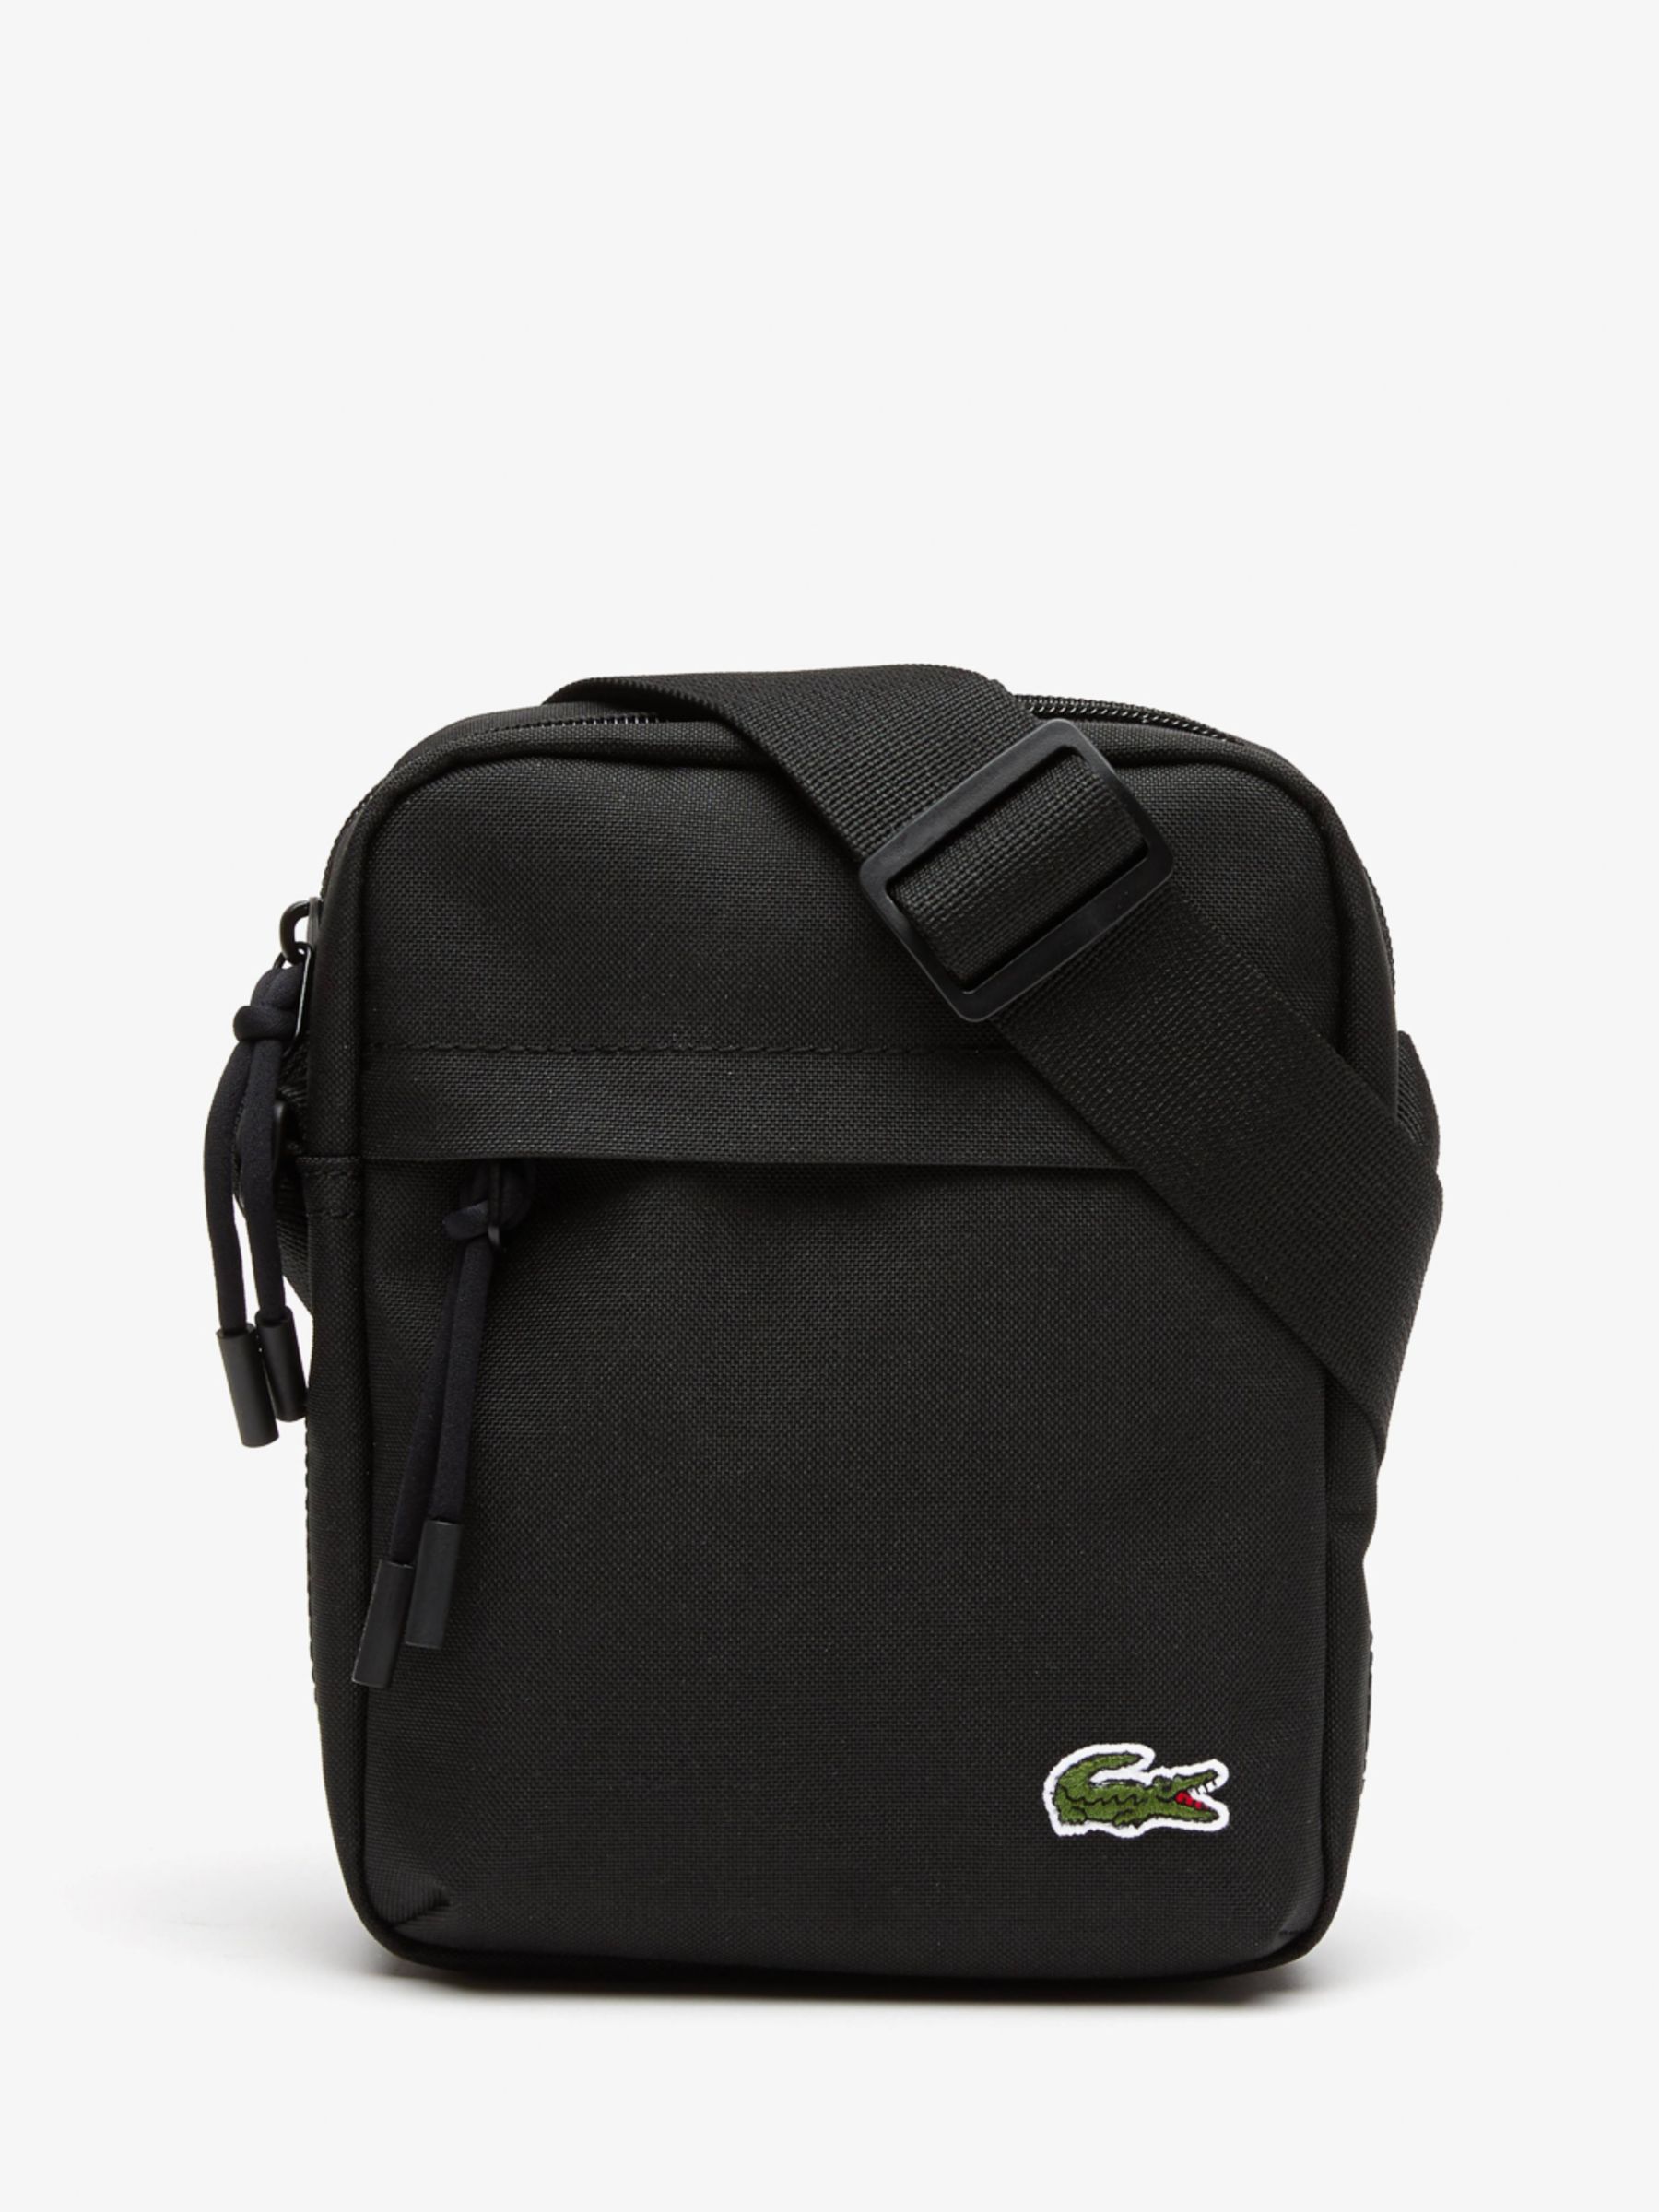 Lacoste Zip Cross Body Bag, Black